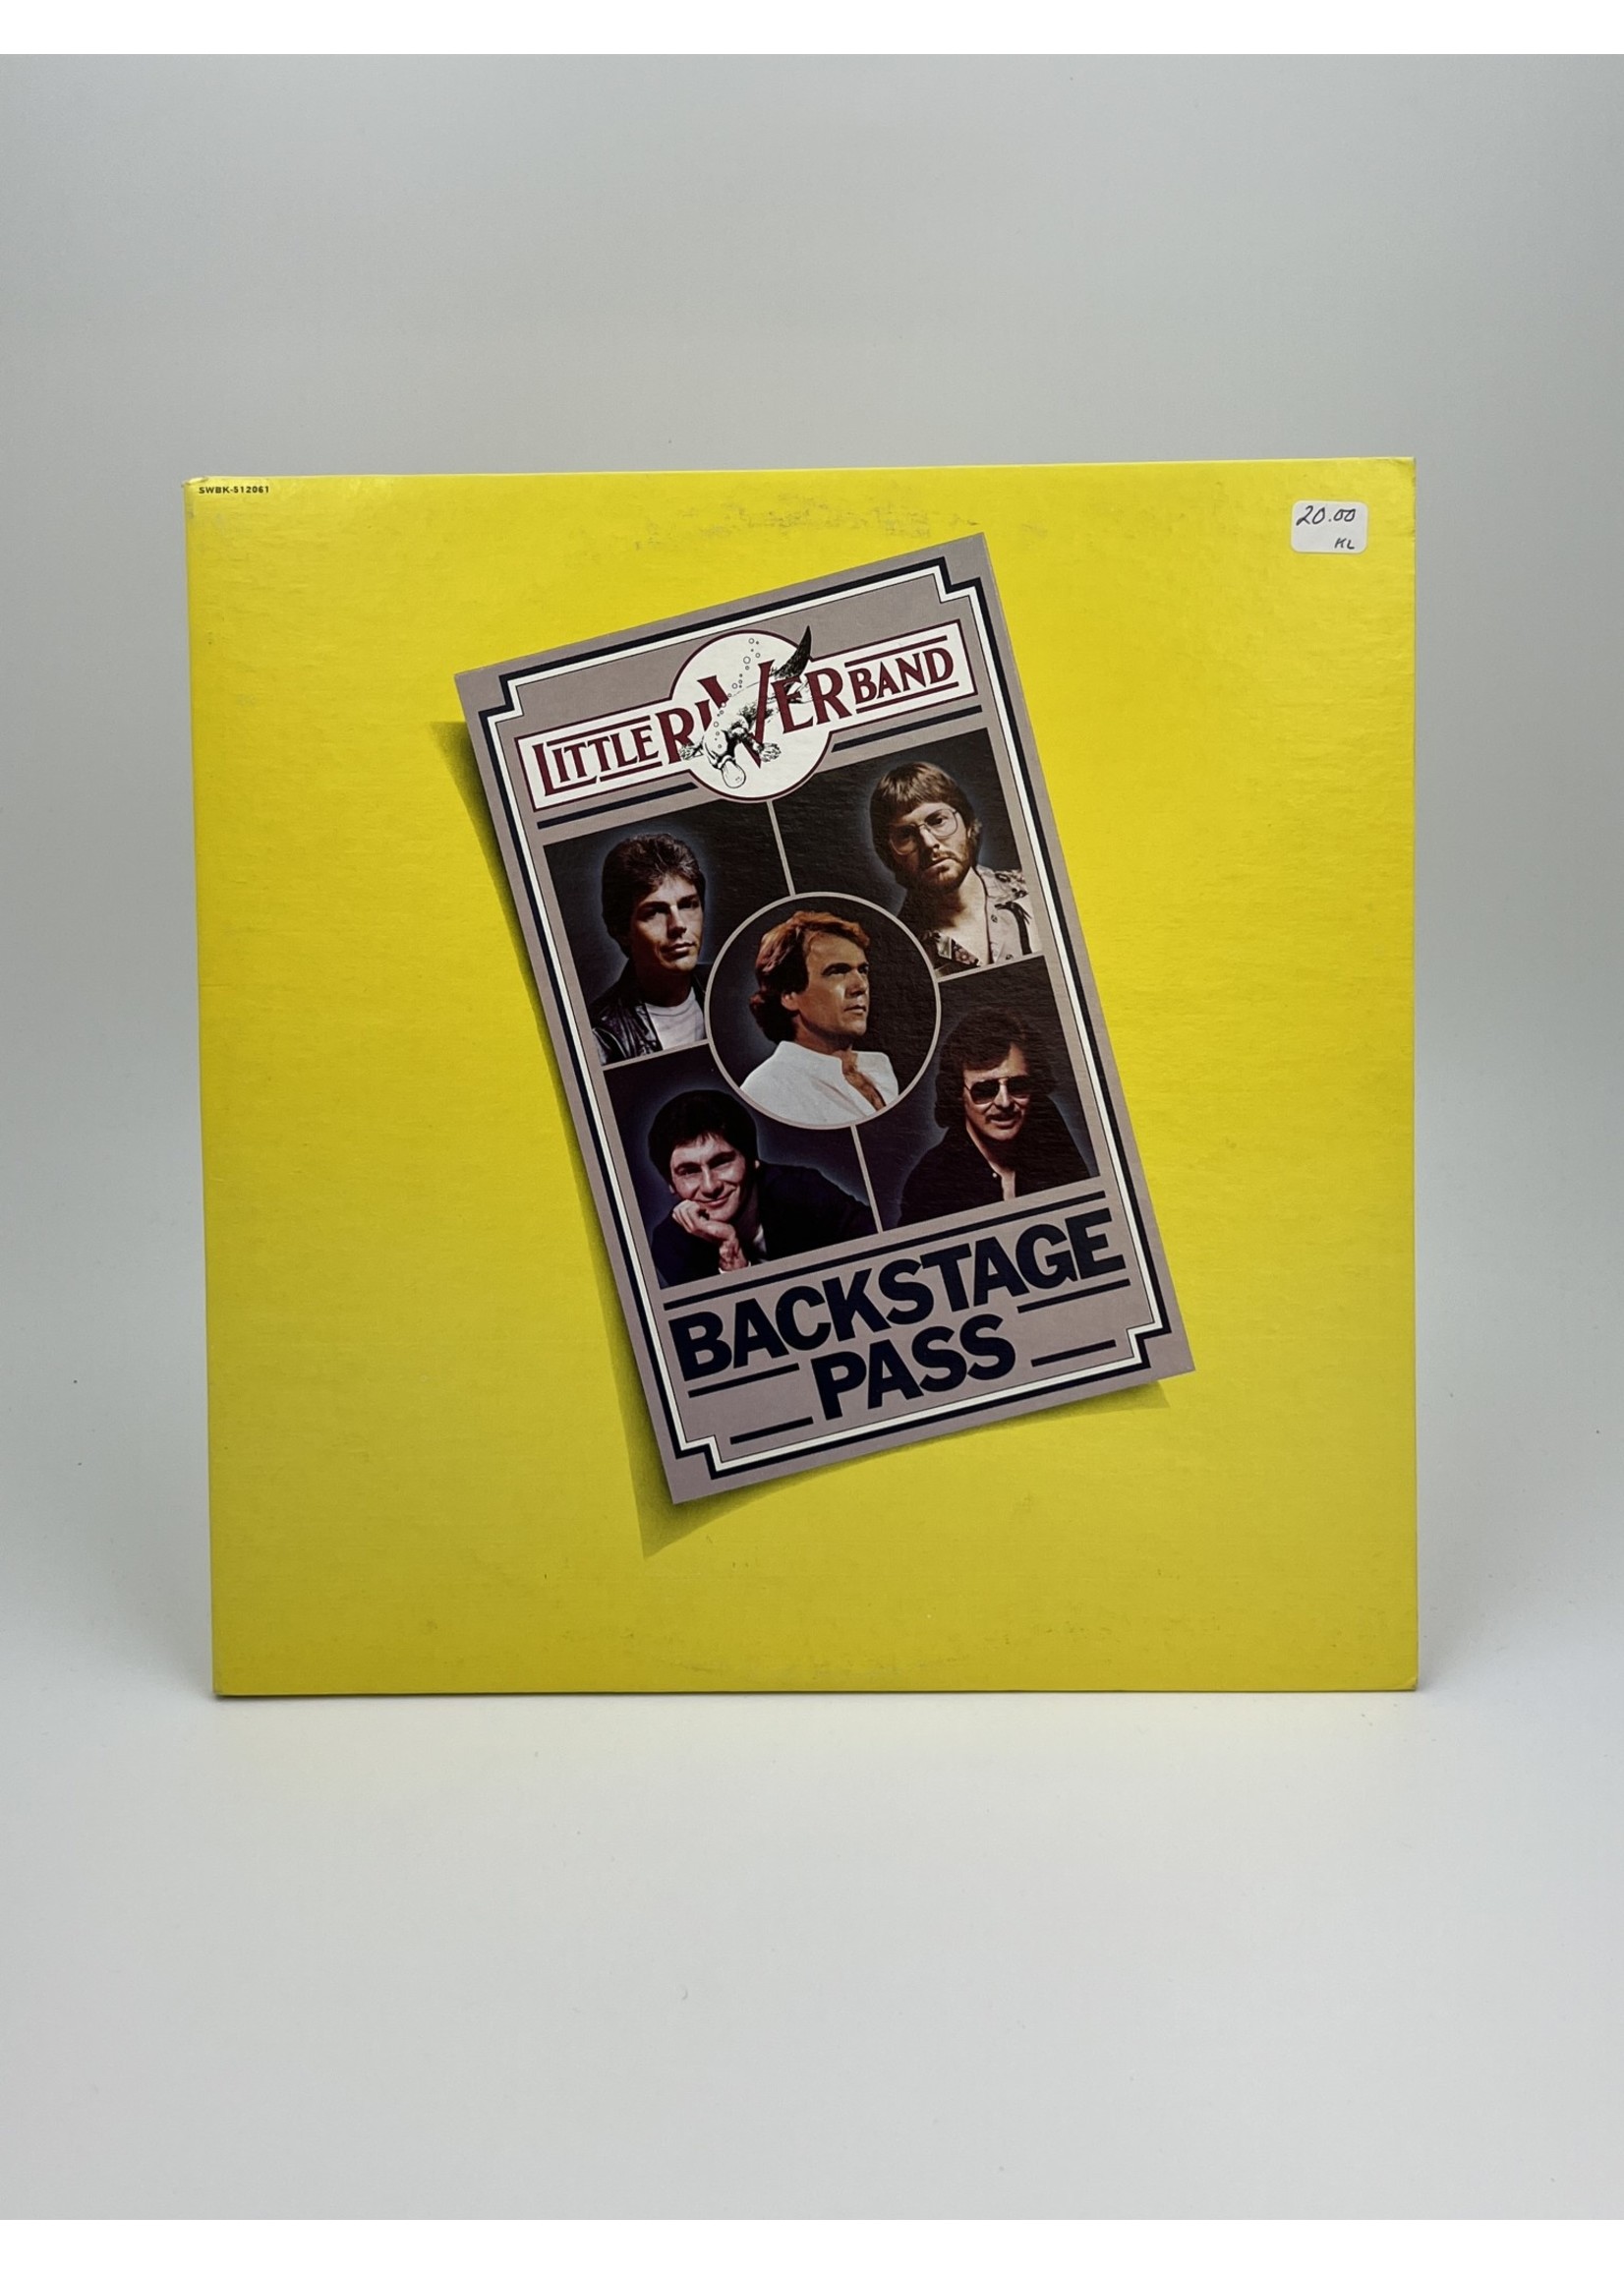 LP Little River Band Backstage Pass 2 LP Record